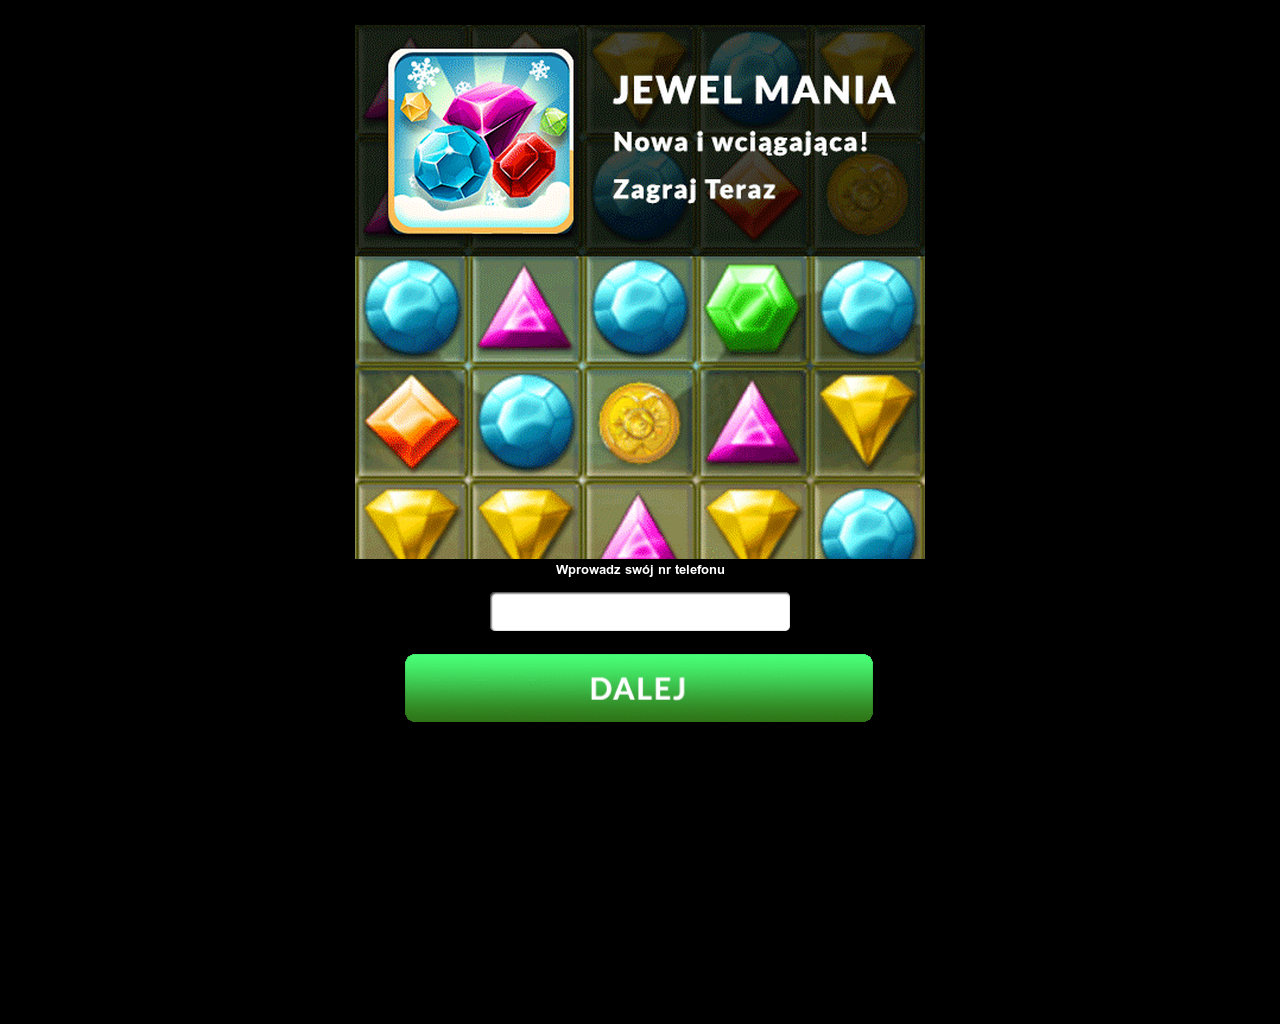  Play Jewel Mania